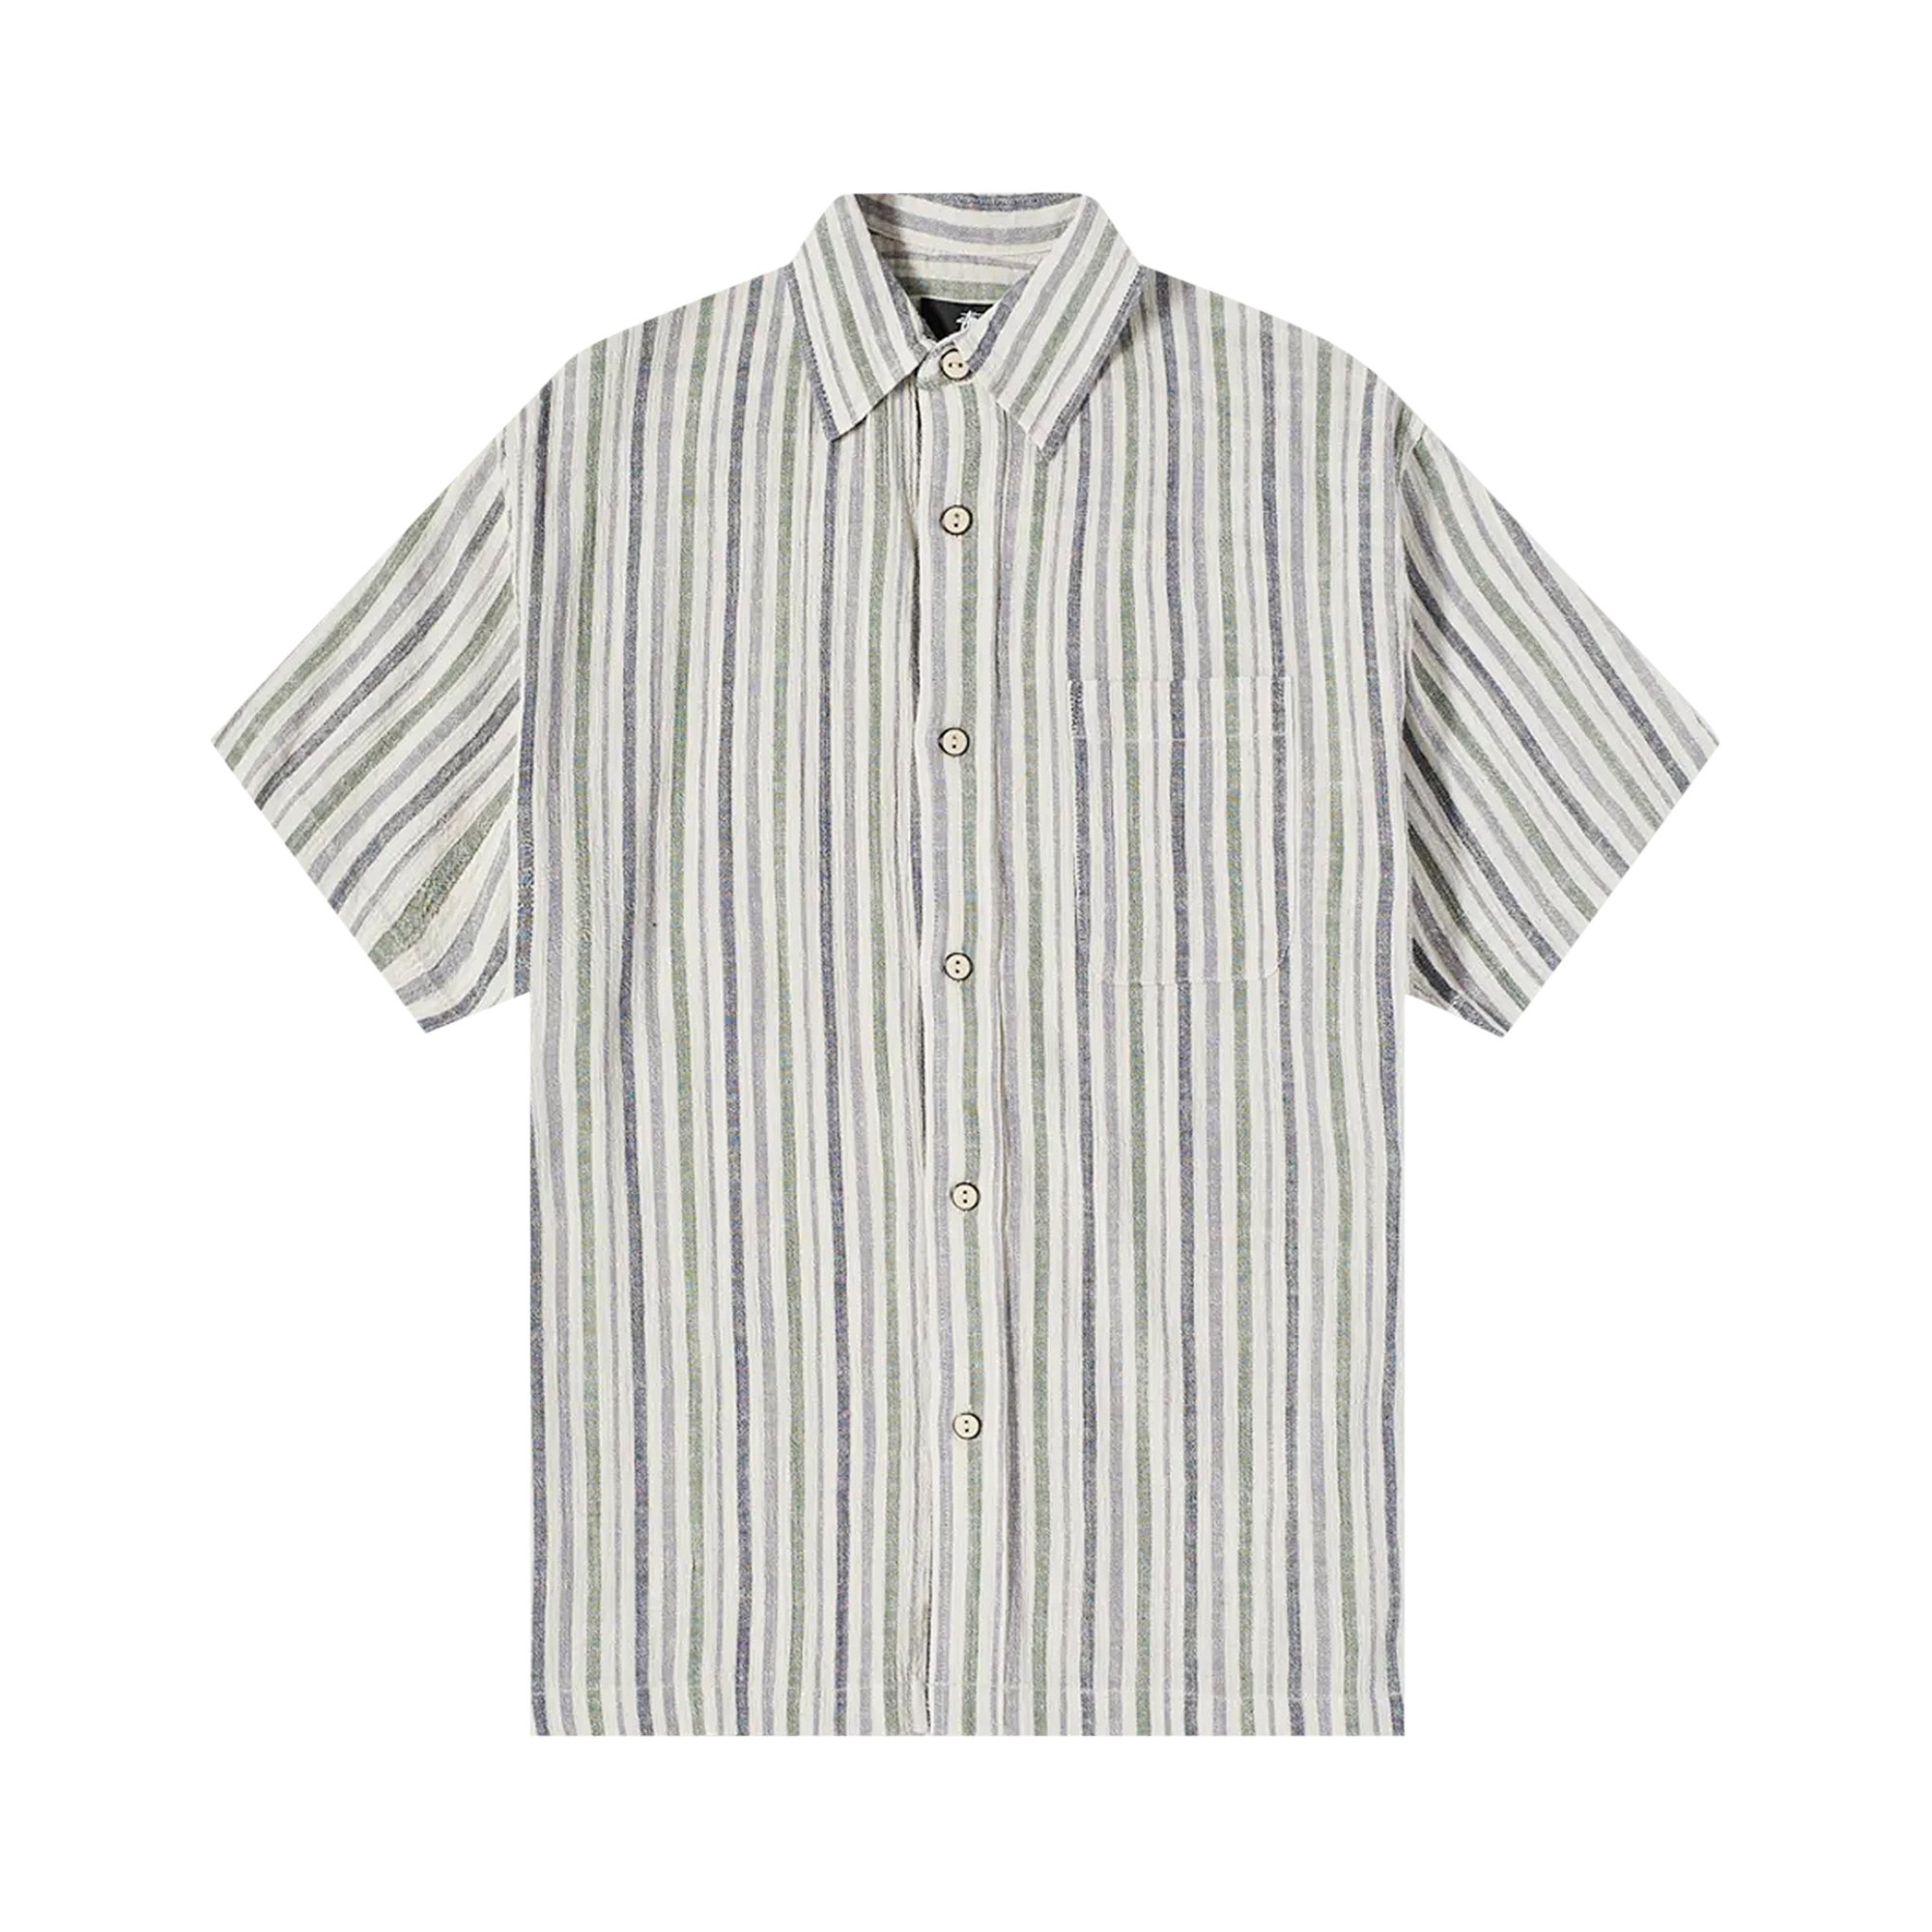 Buy Stussy Wrinkly Cotton Gauze Shirt 'Stripe' - 1110222 STRI